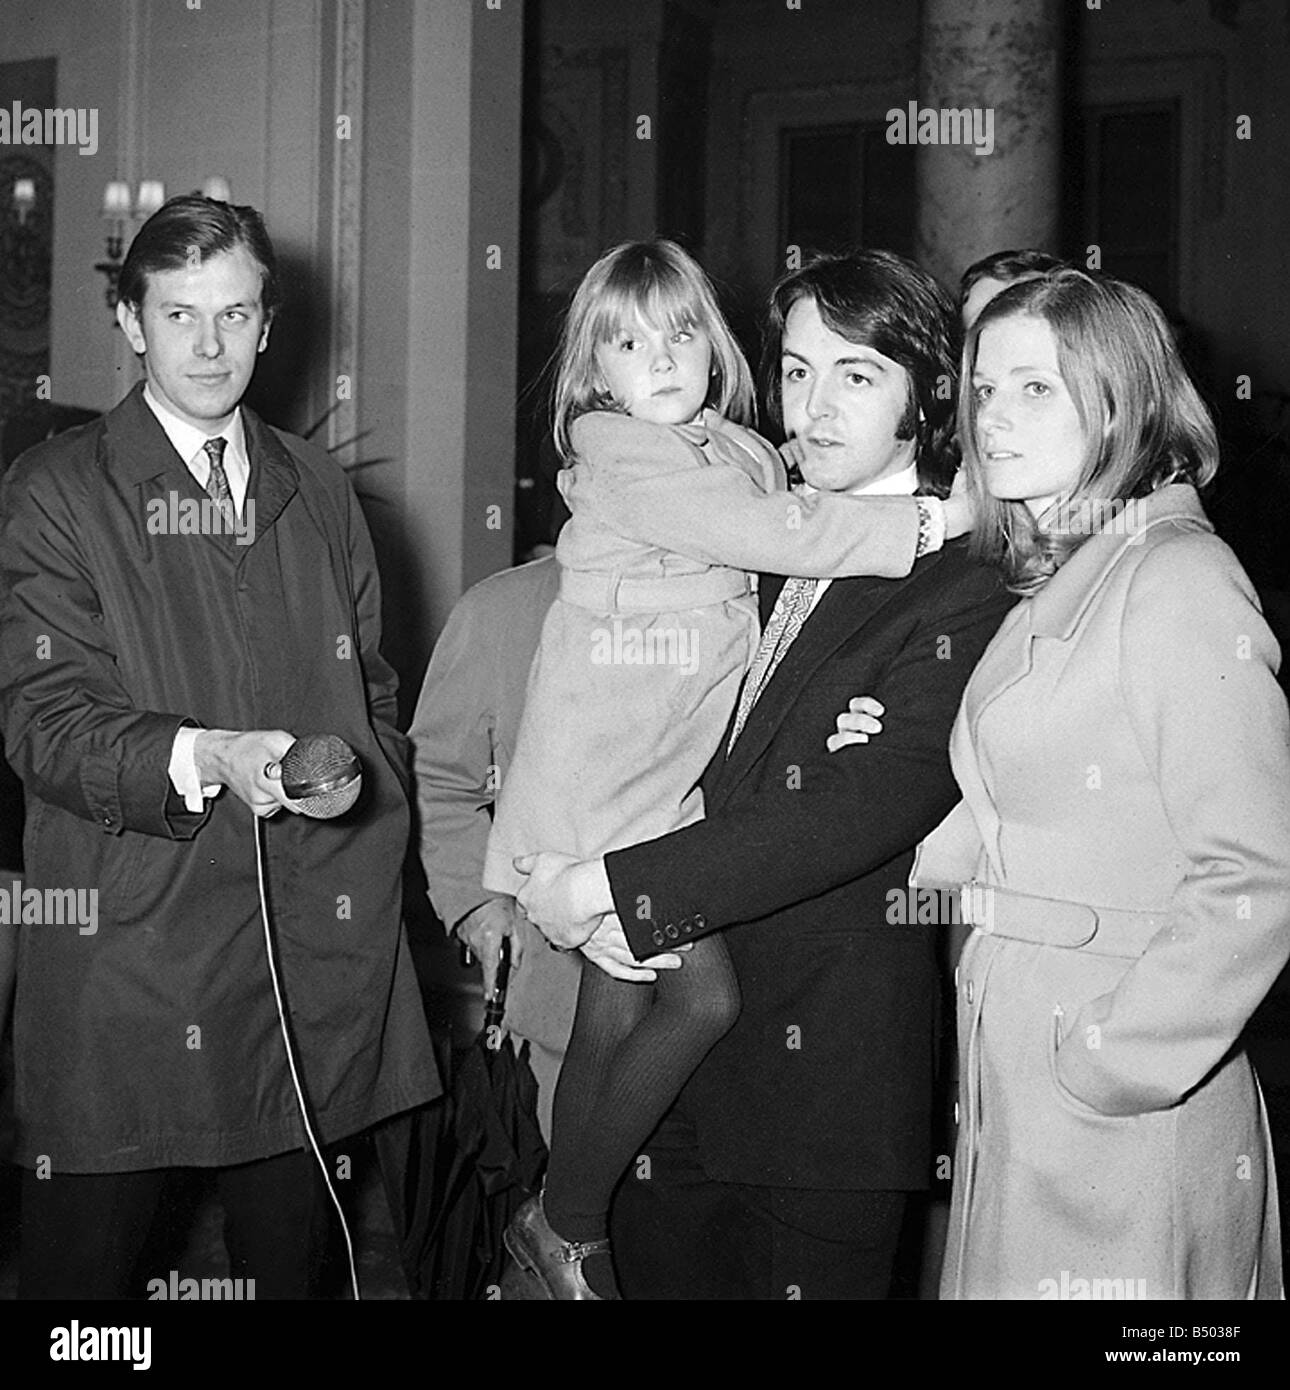 beatles-files-1969-paul-mccartney-with-wife-linda-daughter-heather-B5038F.jpg